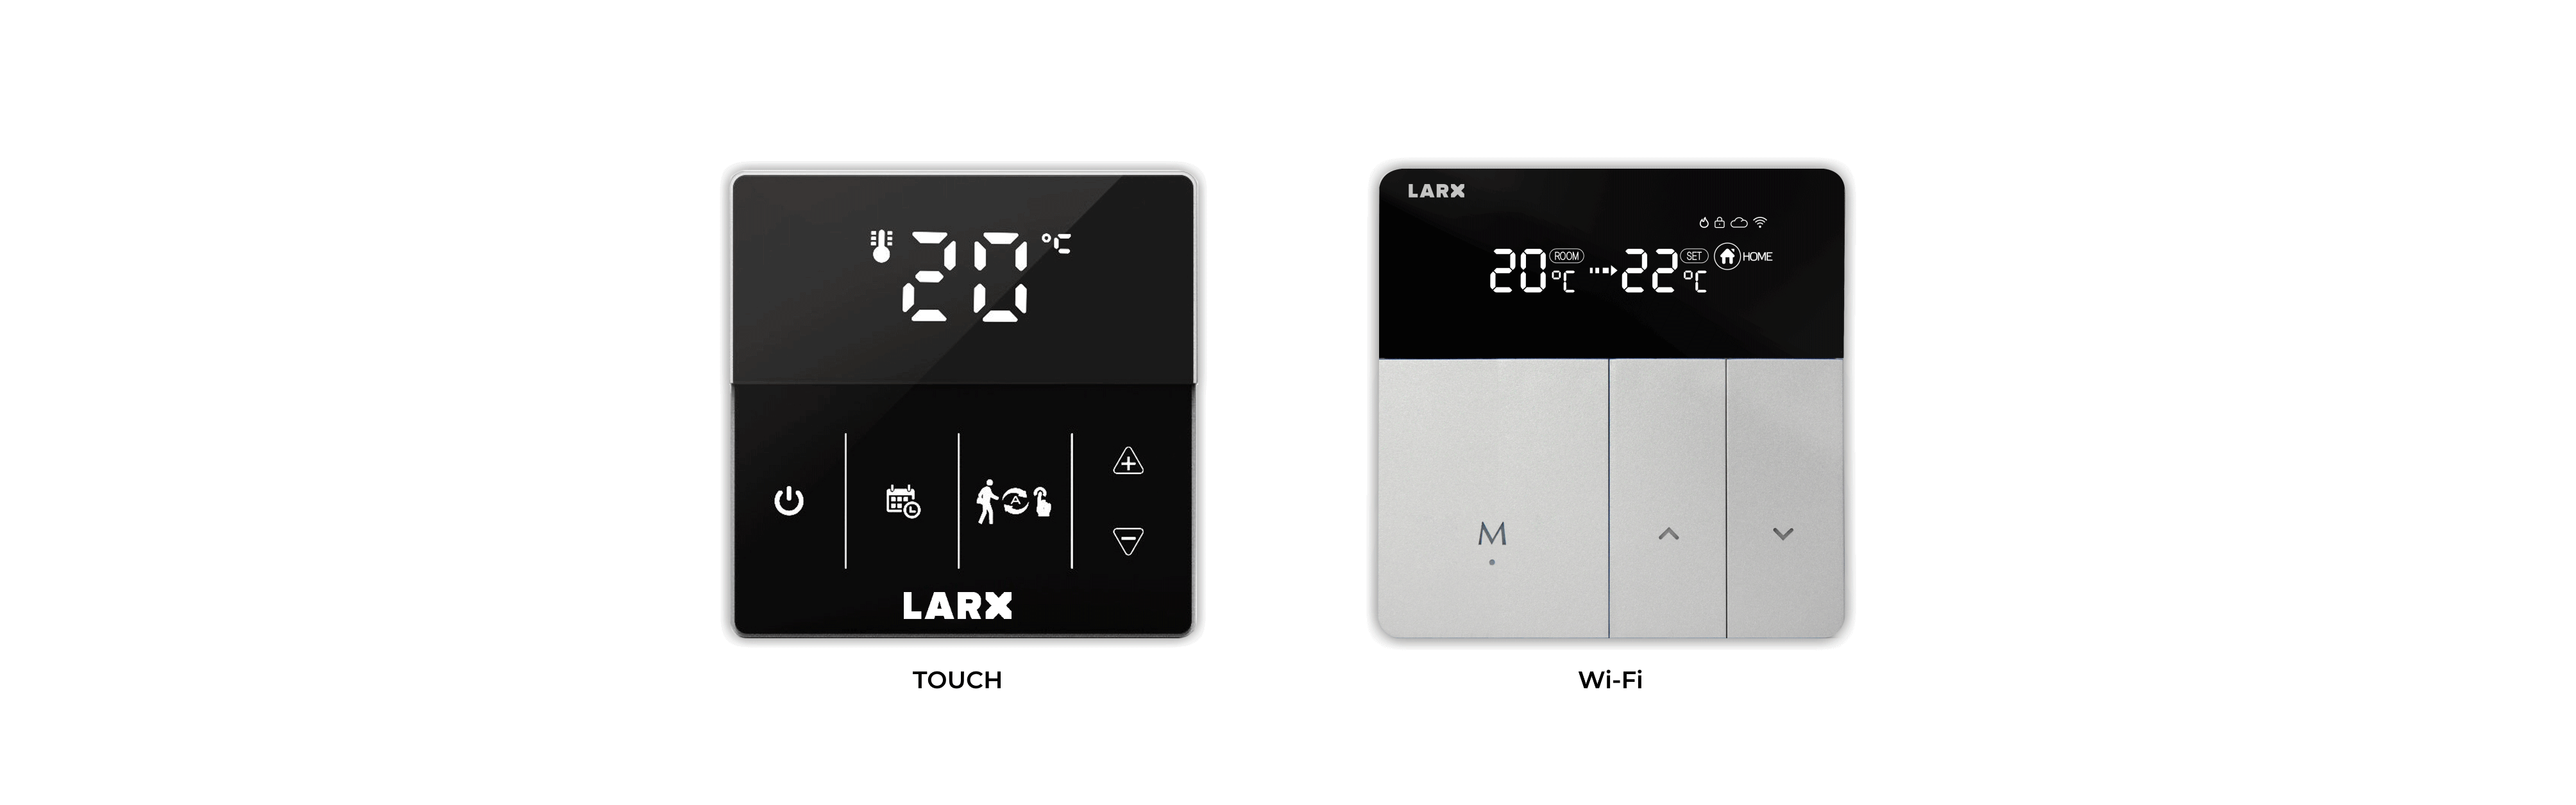 LARX thermostat for efficient control